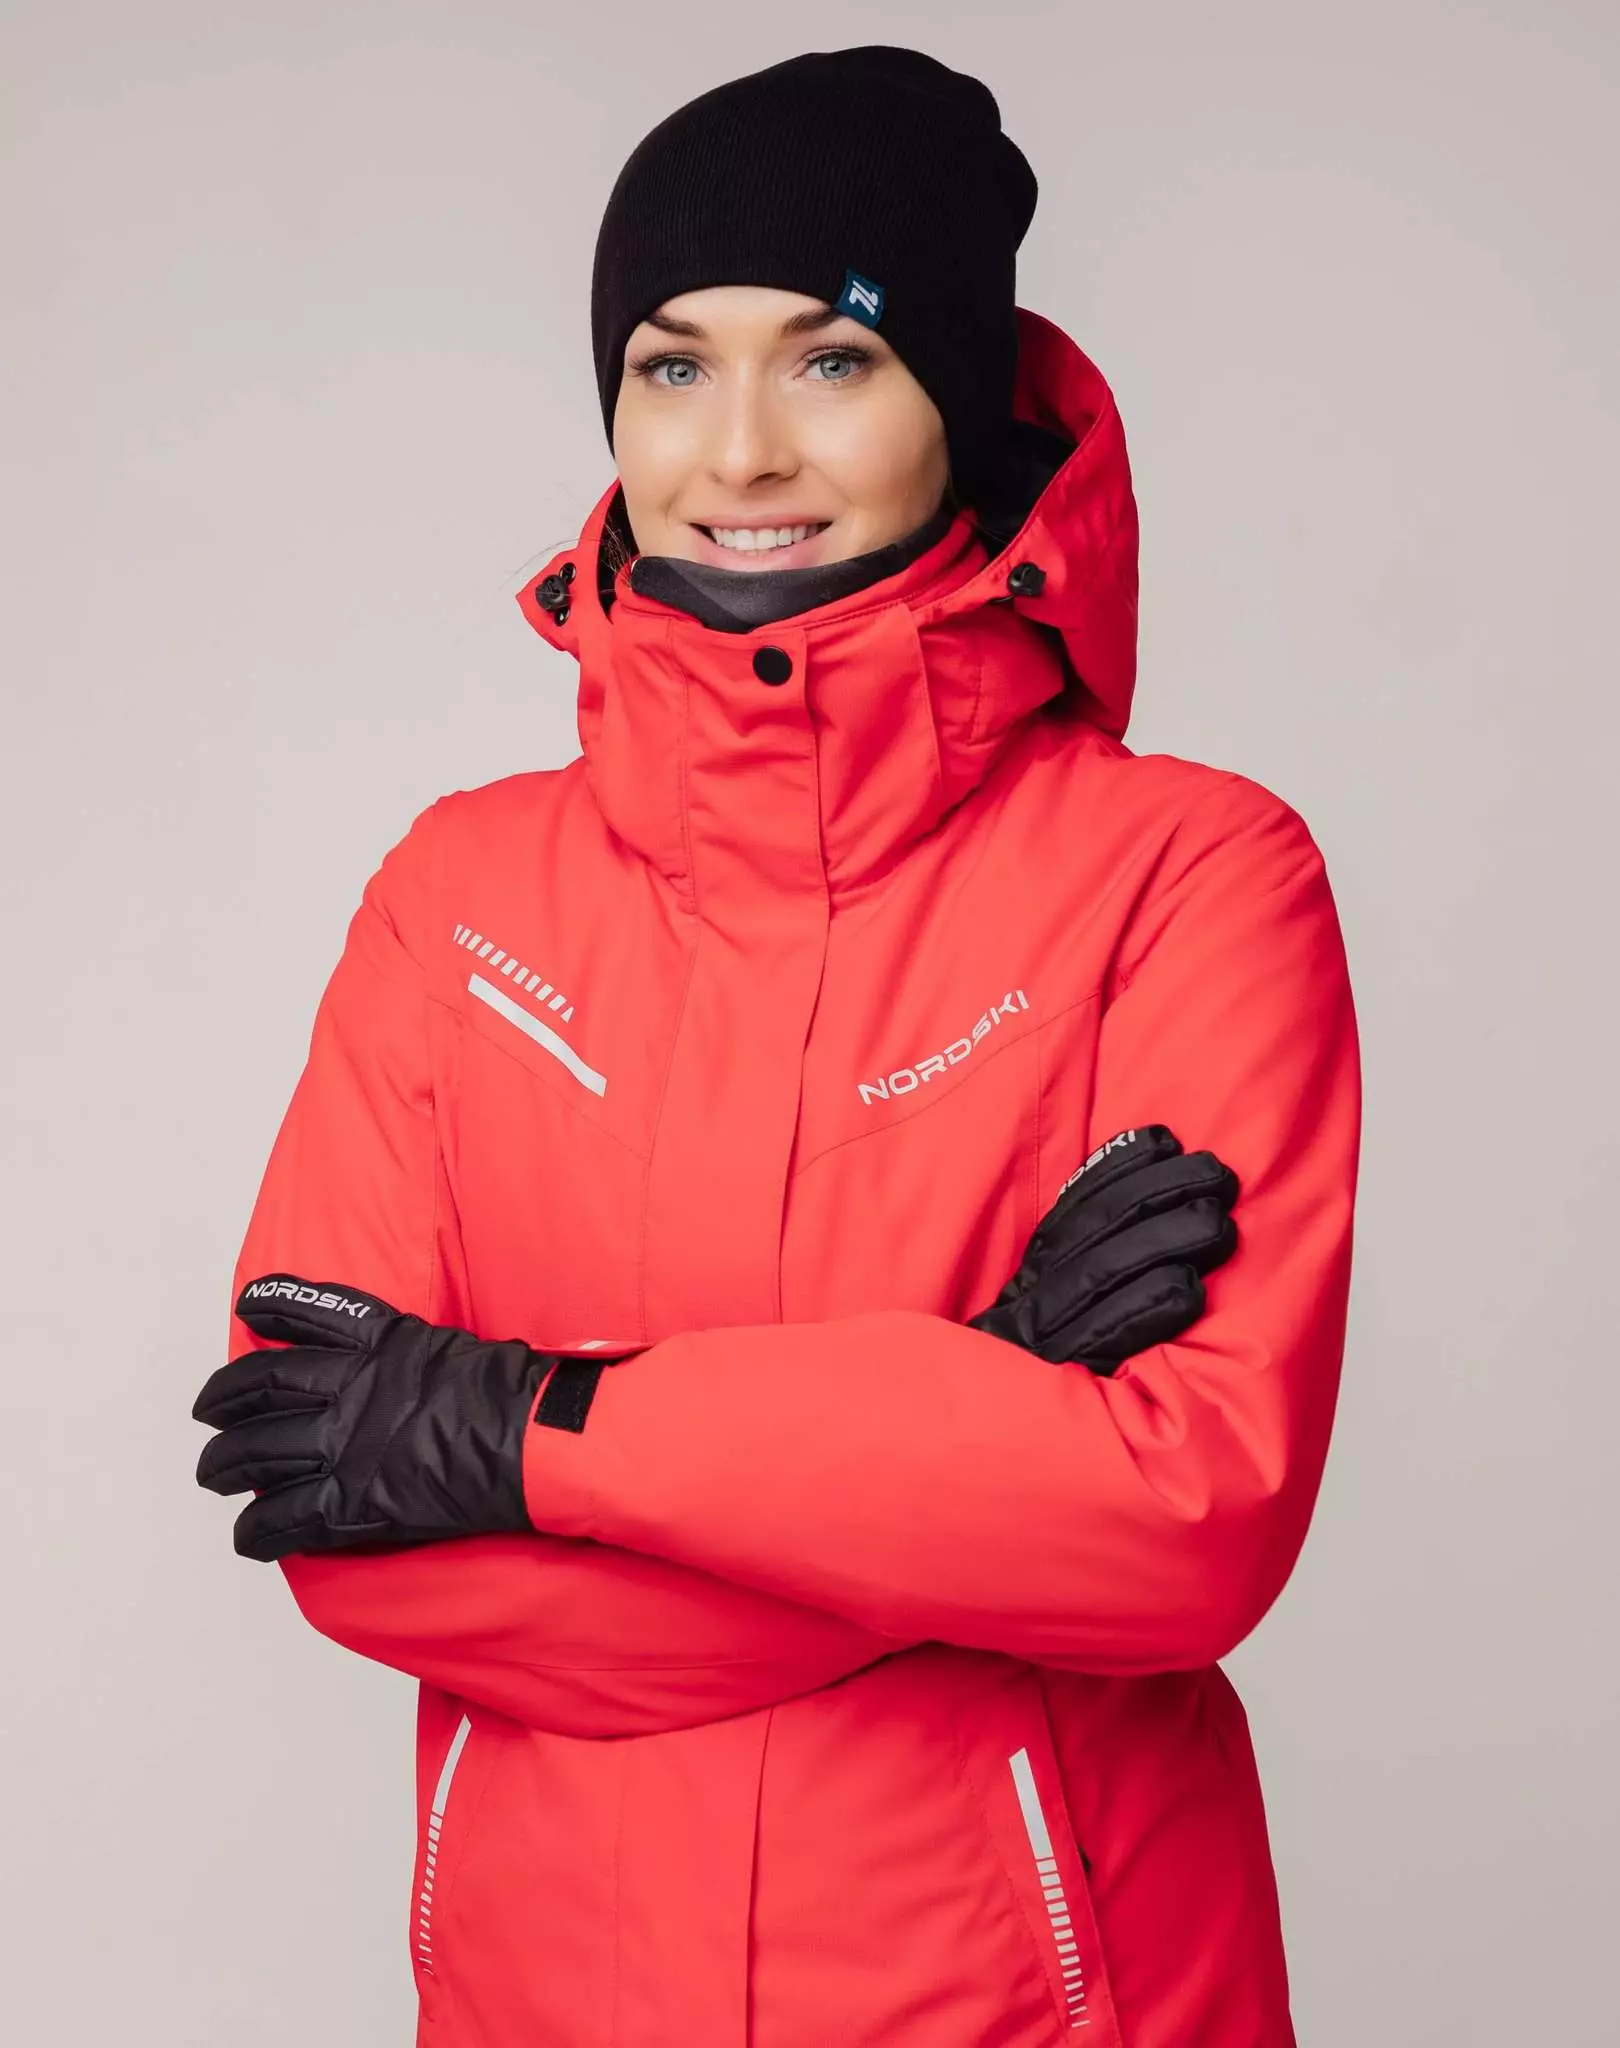 Ski Jacket: Γυναικείο χειμερινό μπουφάν για σκι αντοχής, προθέρμανση παιδιών και ενήλικες σακάκι σκιέρ. Πώς να επιλέξετε για πατινάζ; 20201_25